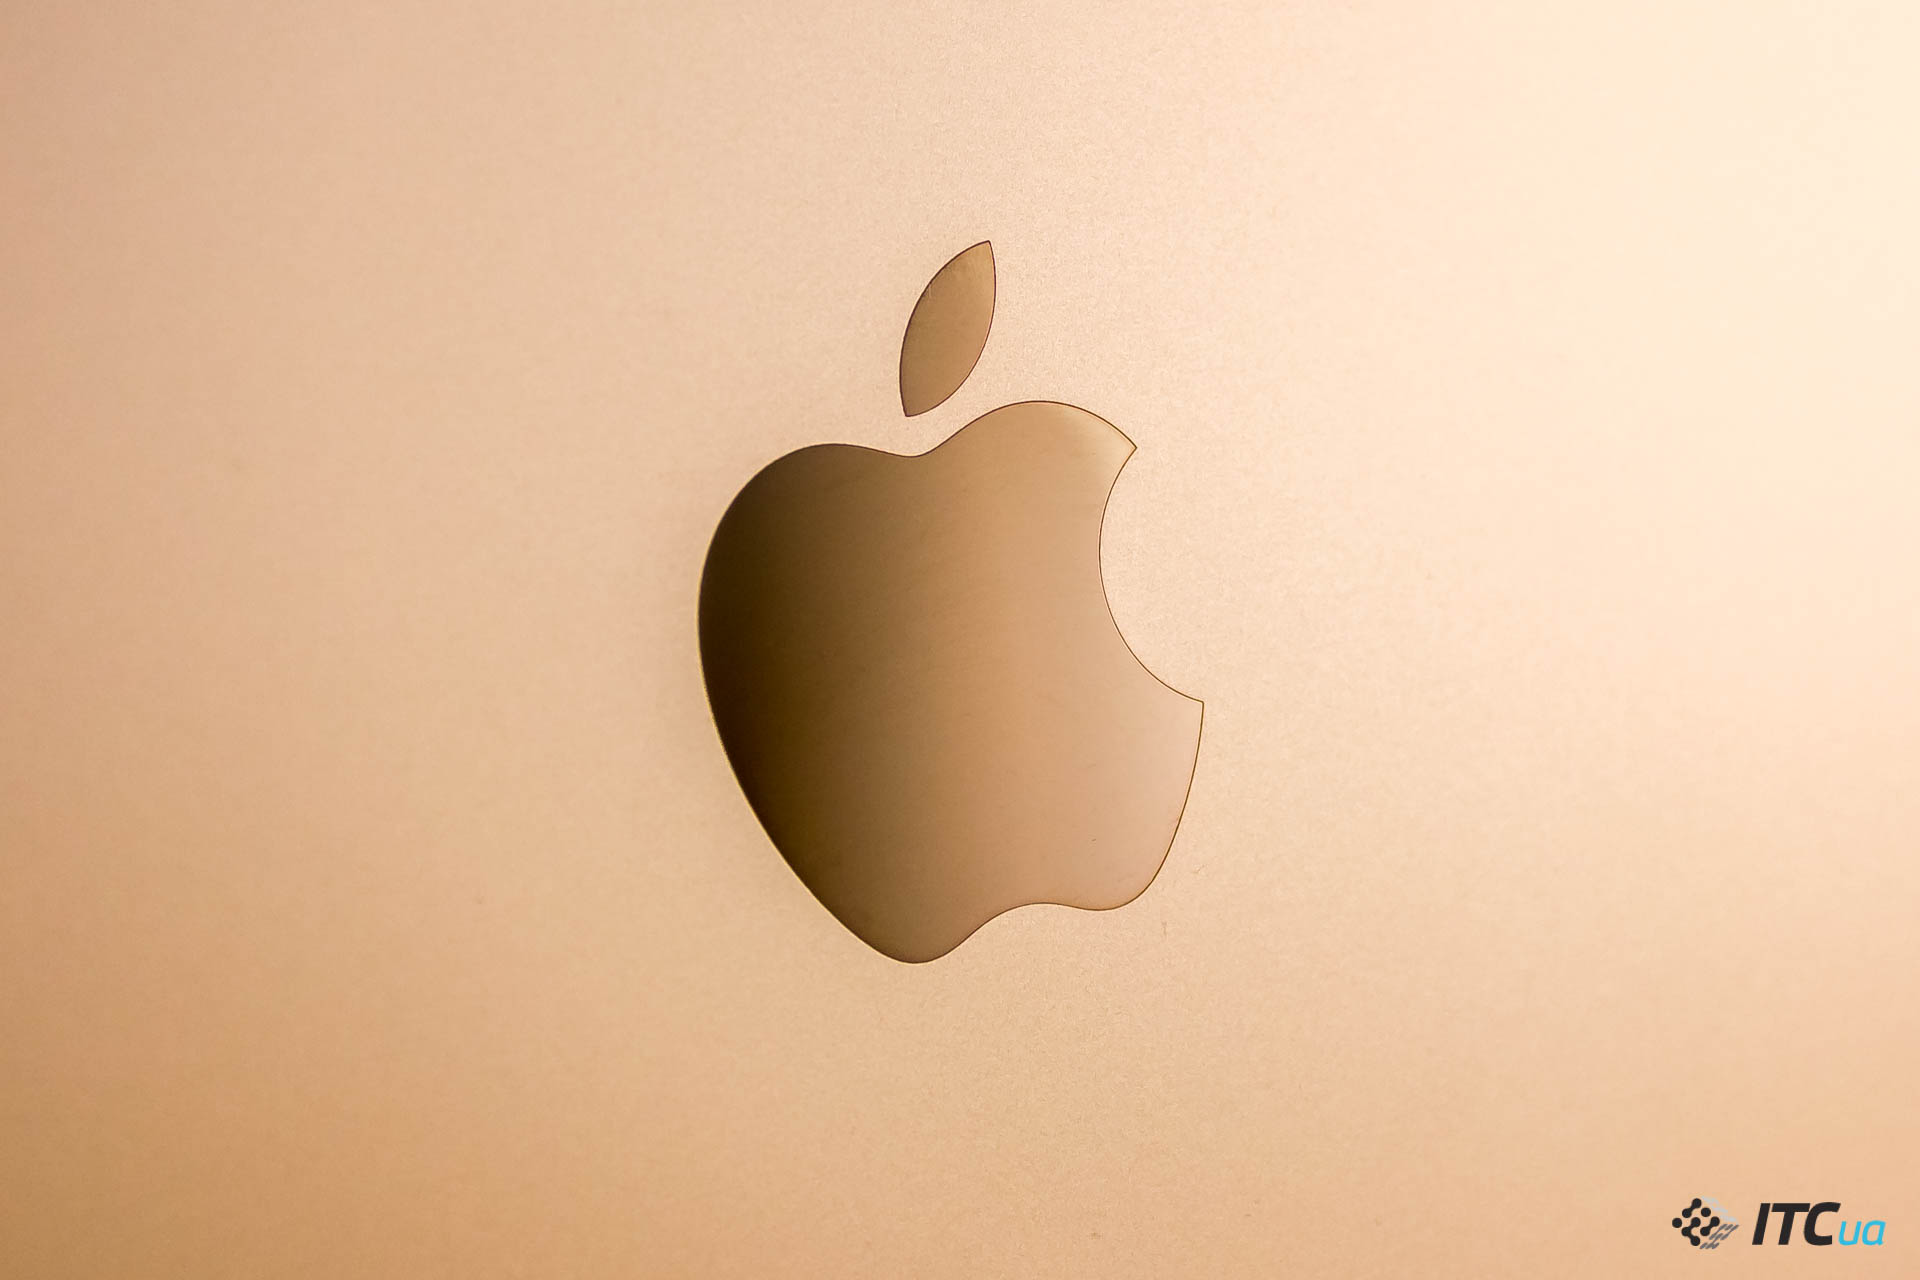 Обзор ультрабука Apple MacBook Air 2020